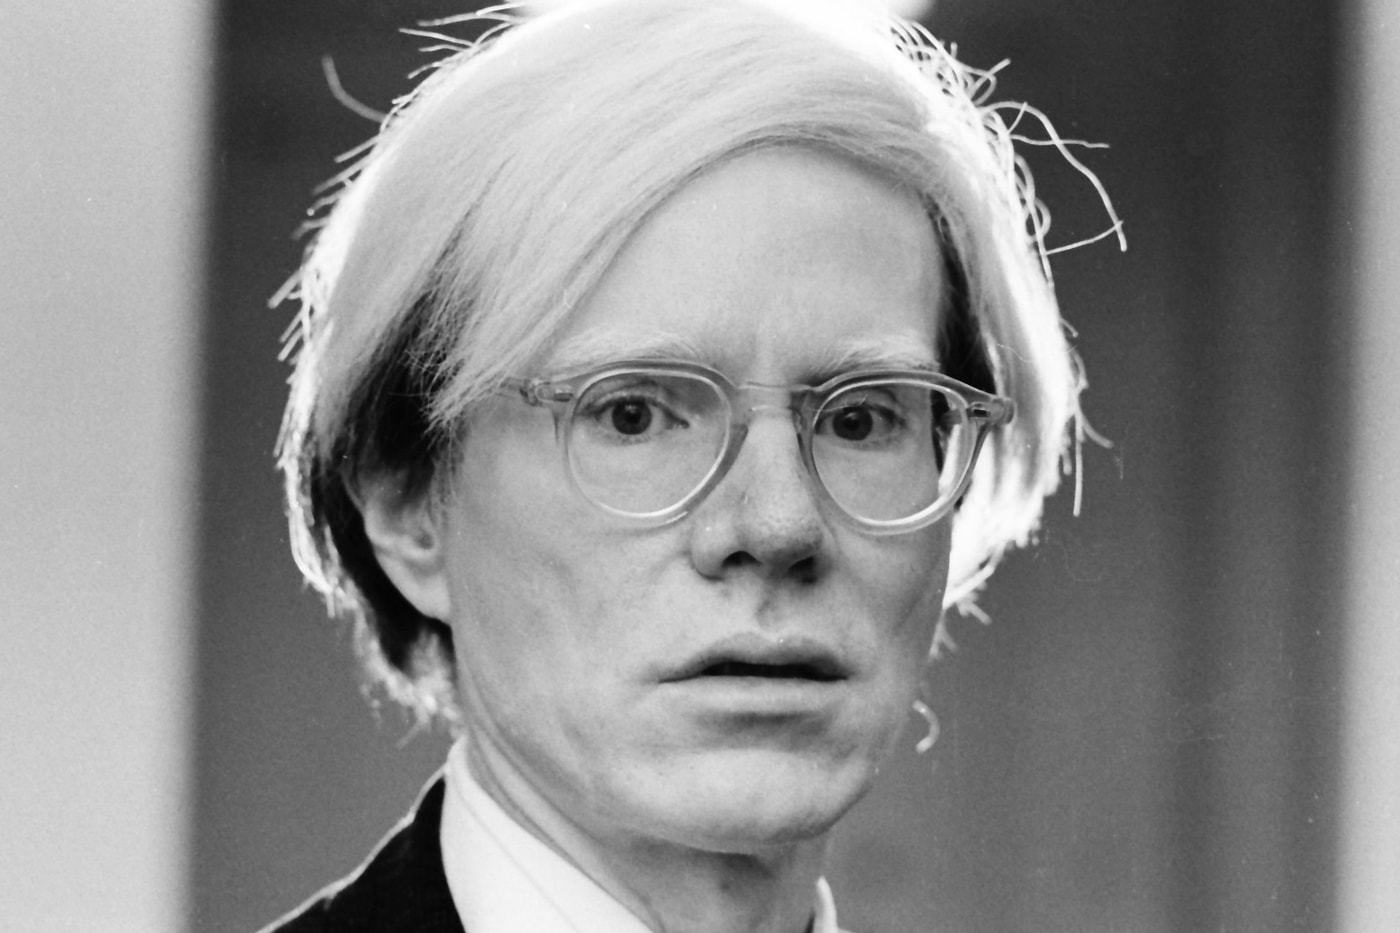 Andy Warhol Prince Print Series U.S. Supreme Court